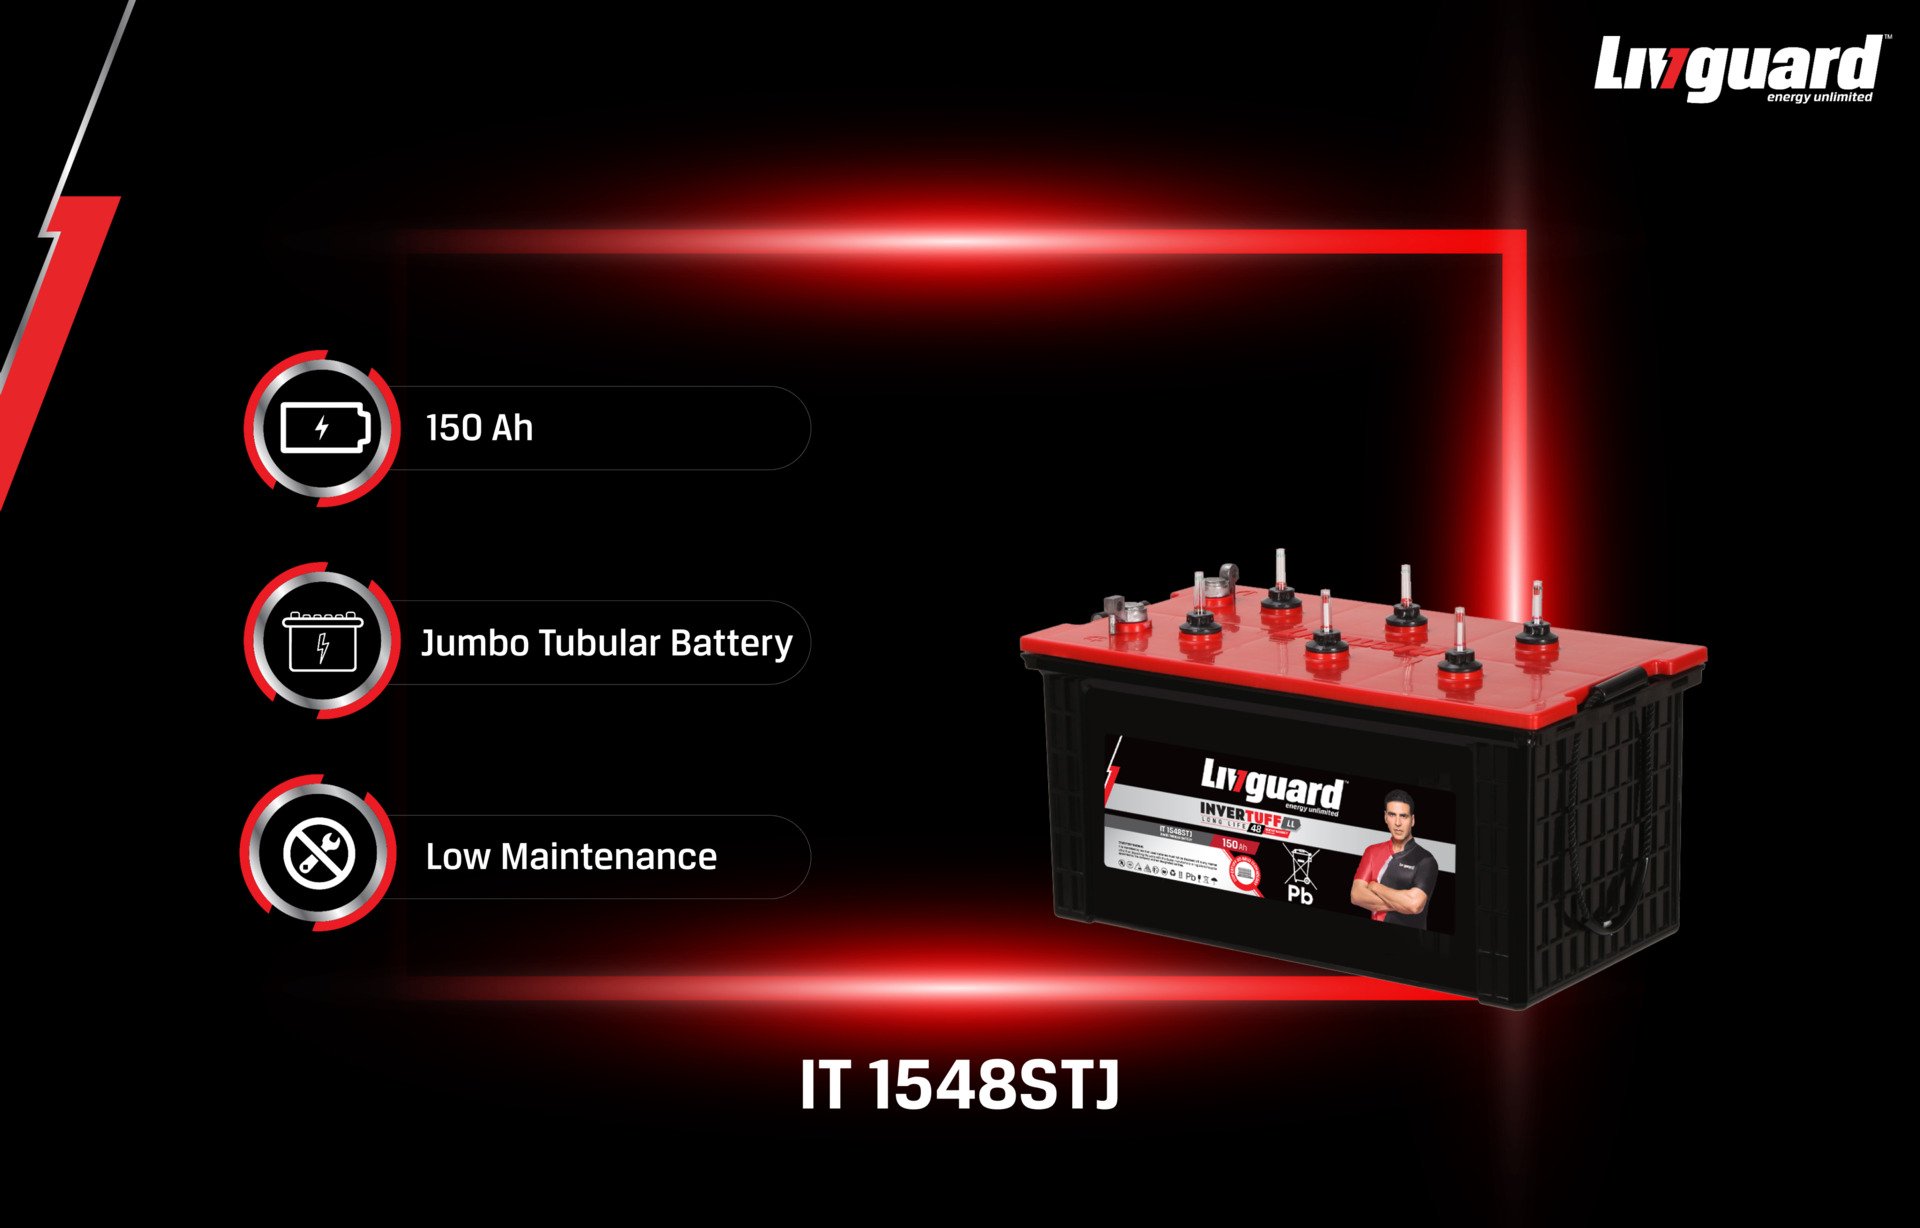 Livguard INVERTUFF IT1860TT Inverter Battery 180 Ah